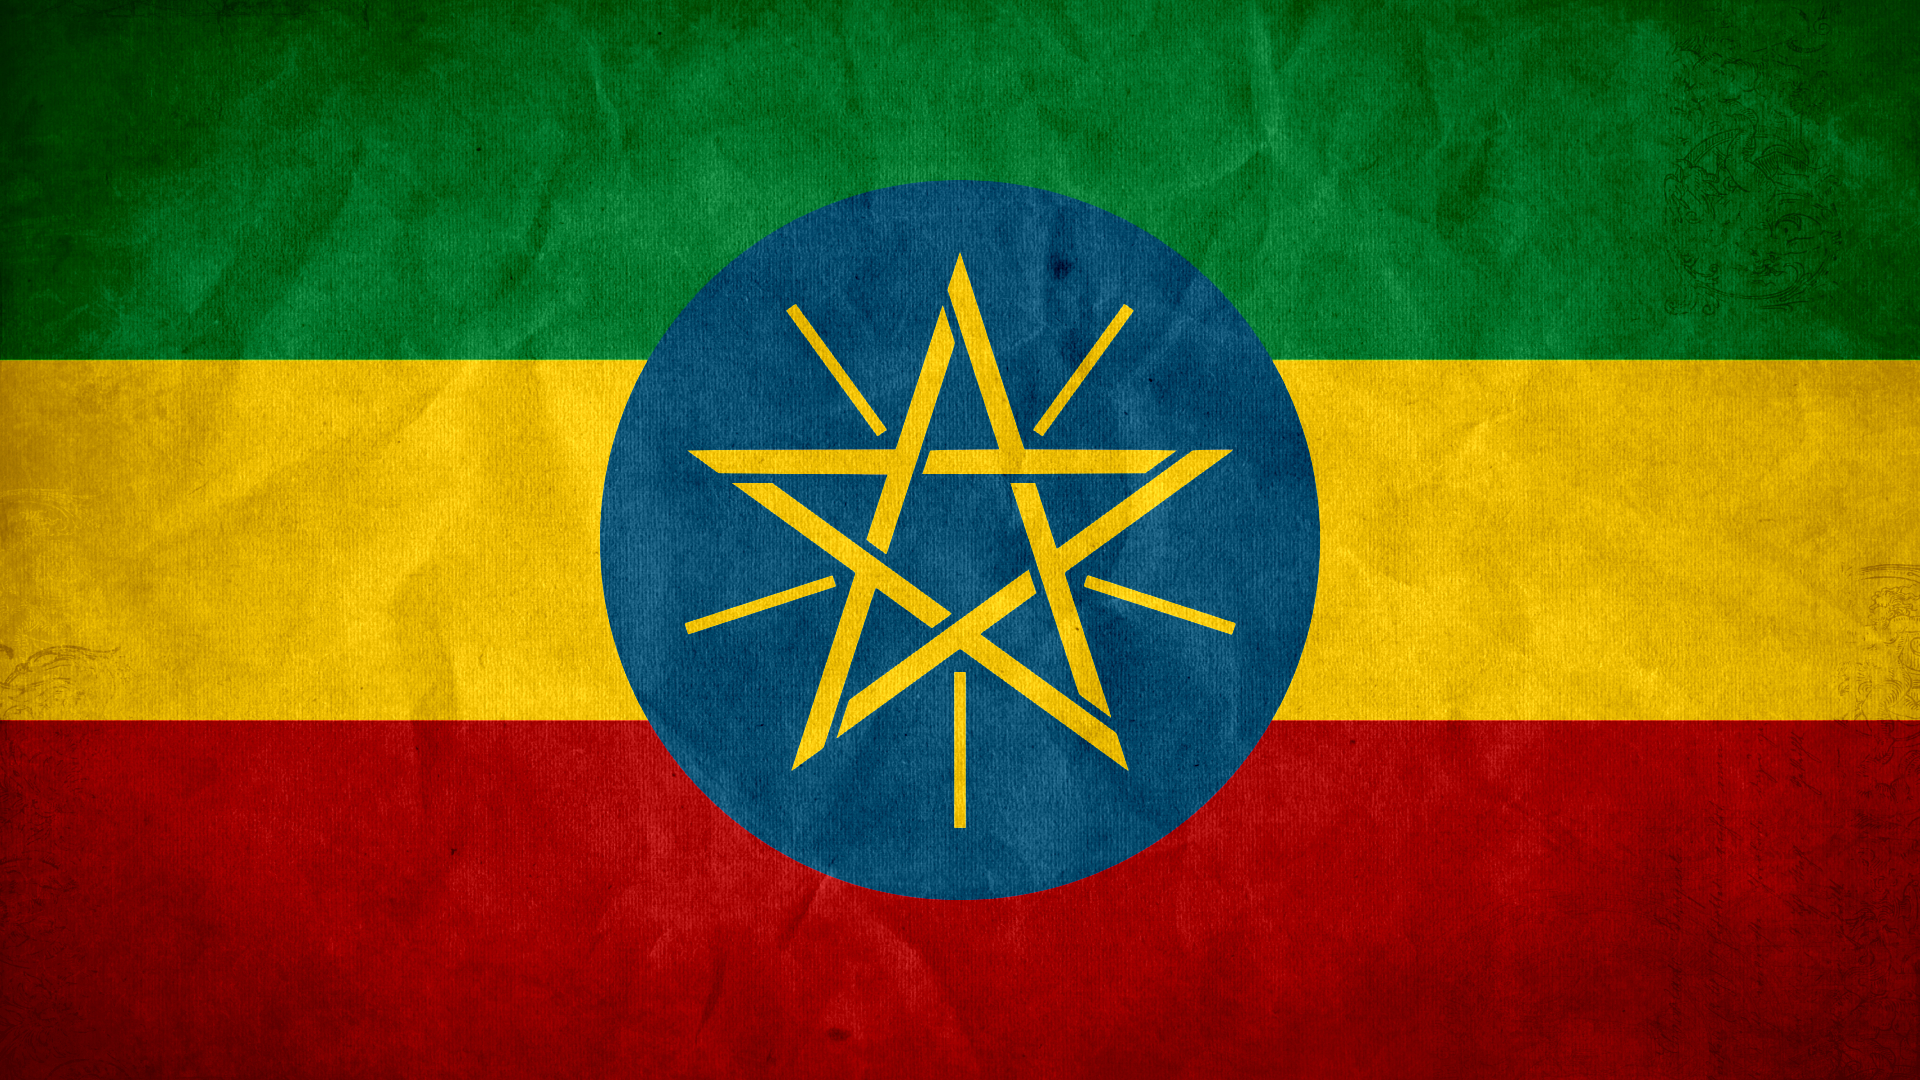 Ethiopia Flag - Wallpaper, High Definition, High Quality, Widescreen